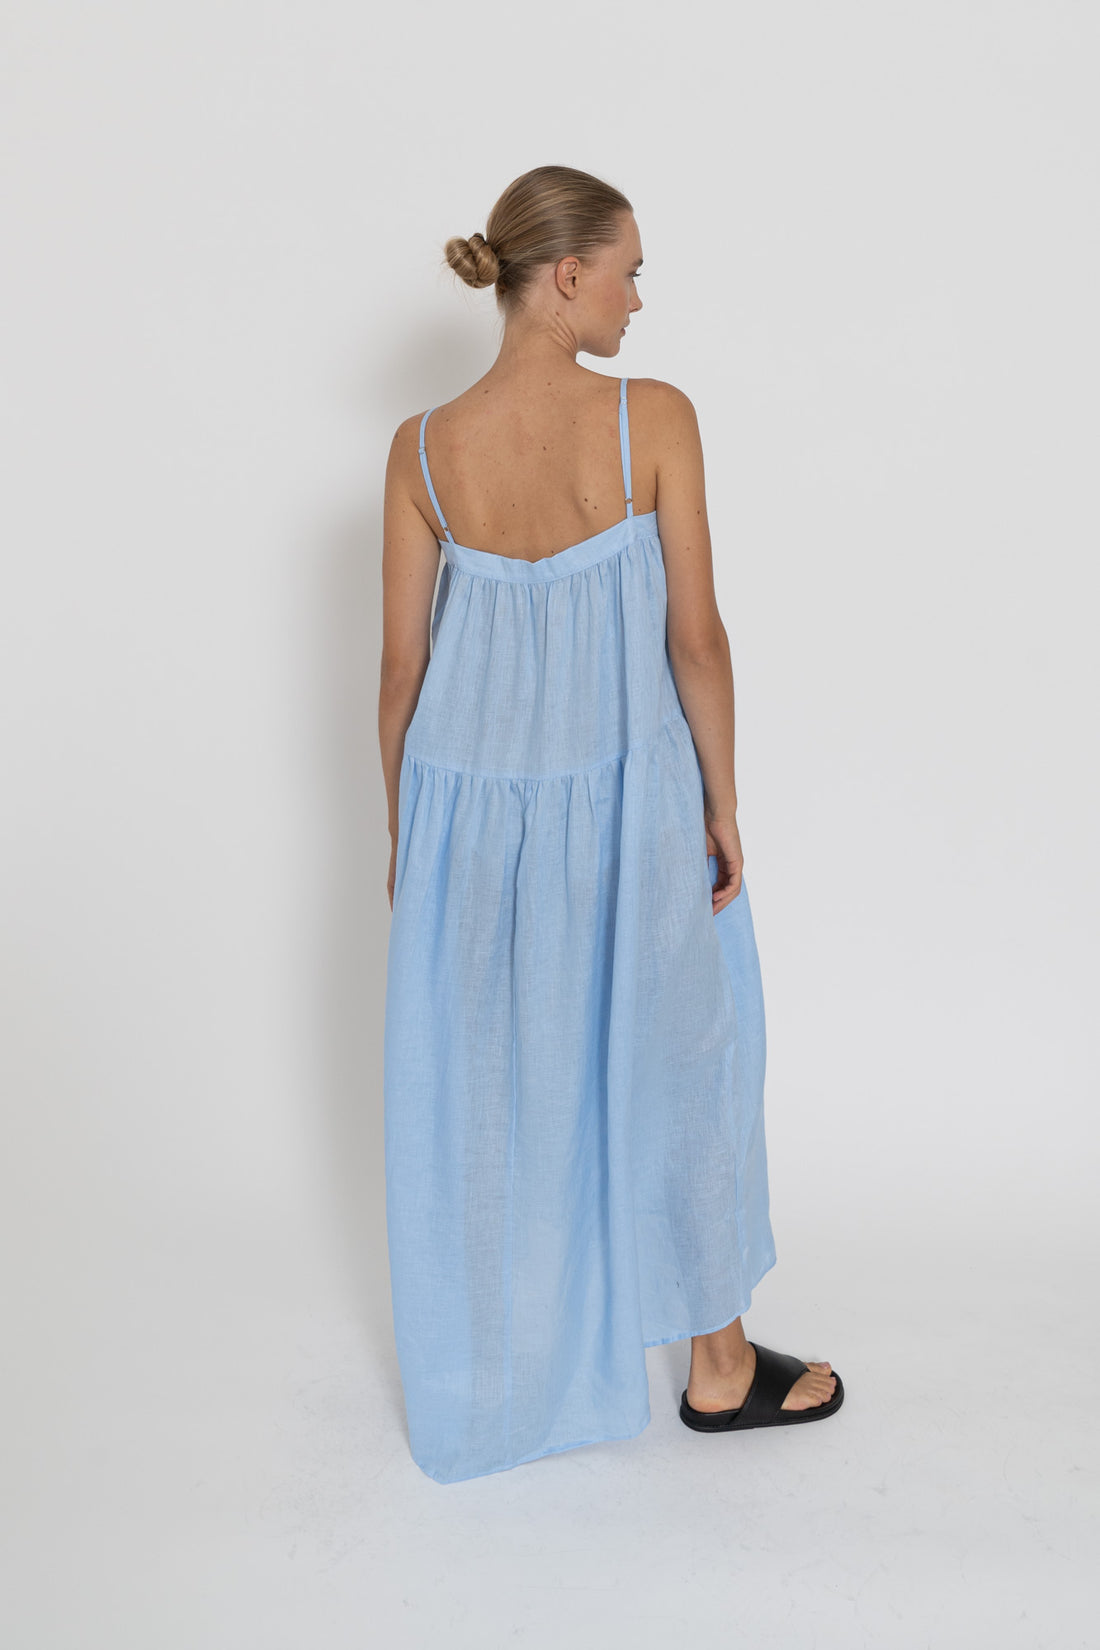 'Ischia Dress'- Amalfi Blue